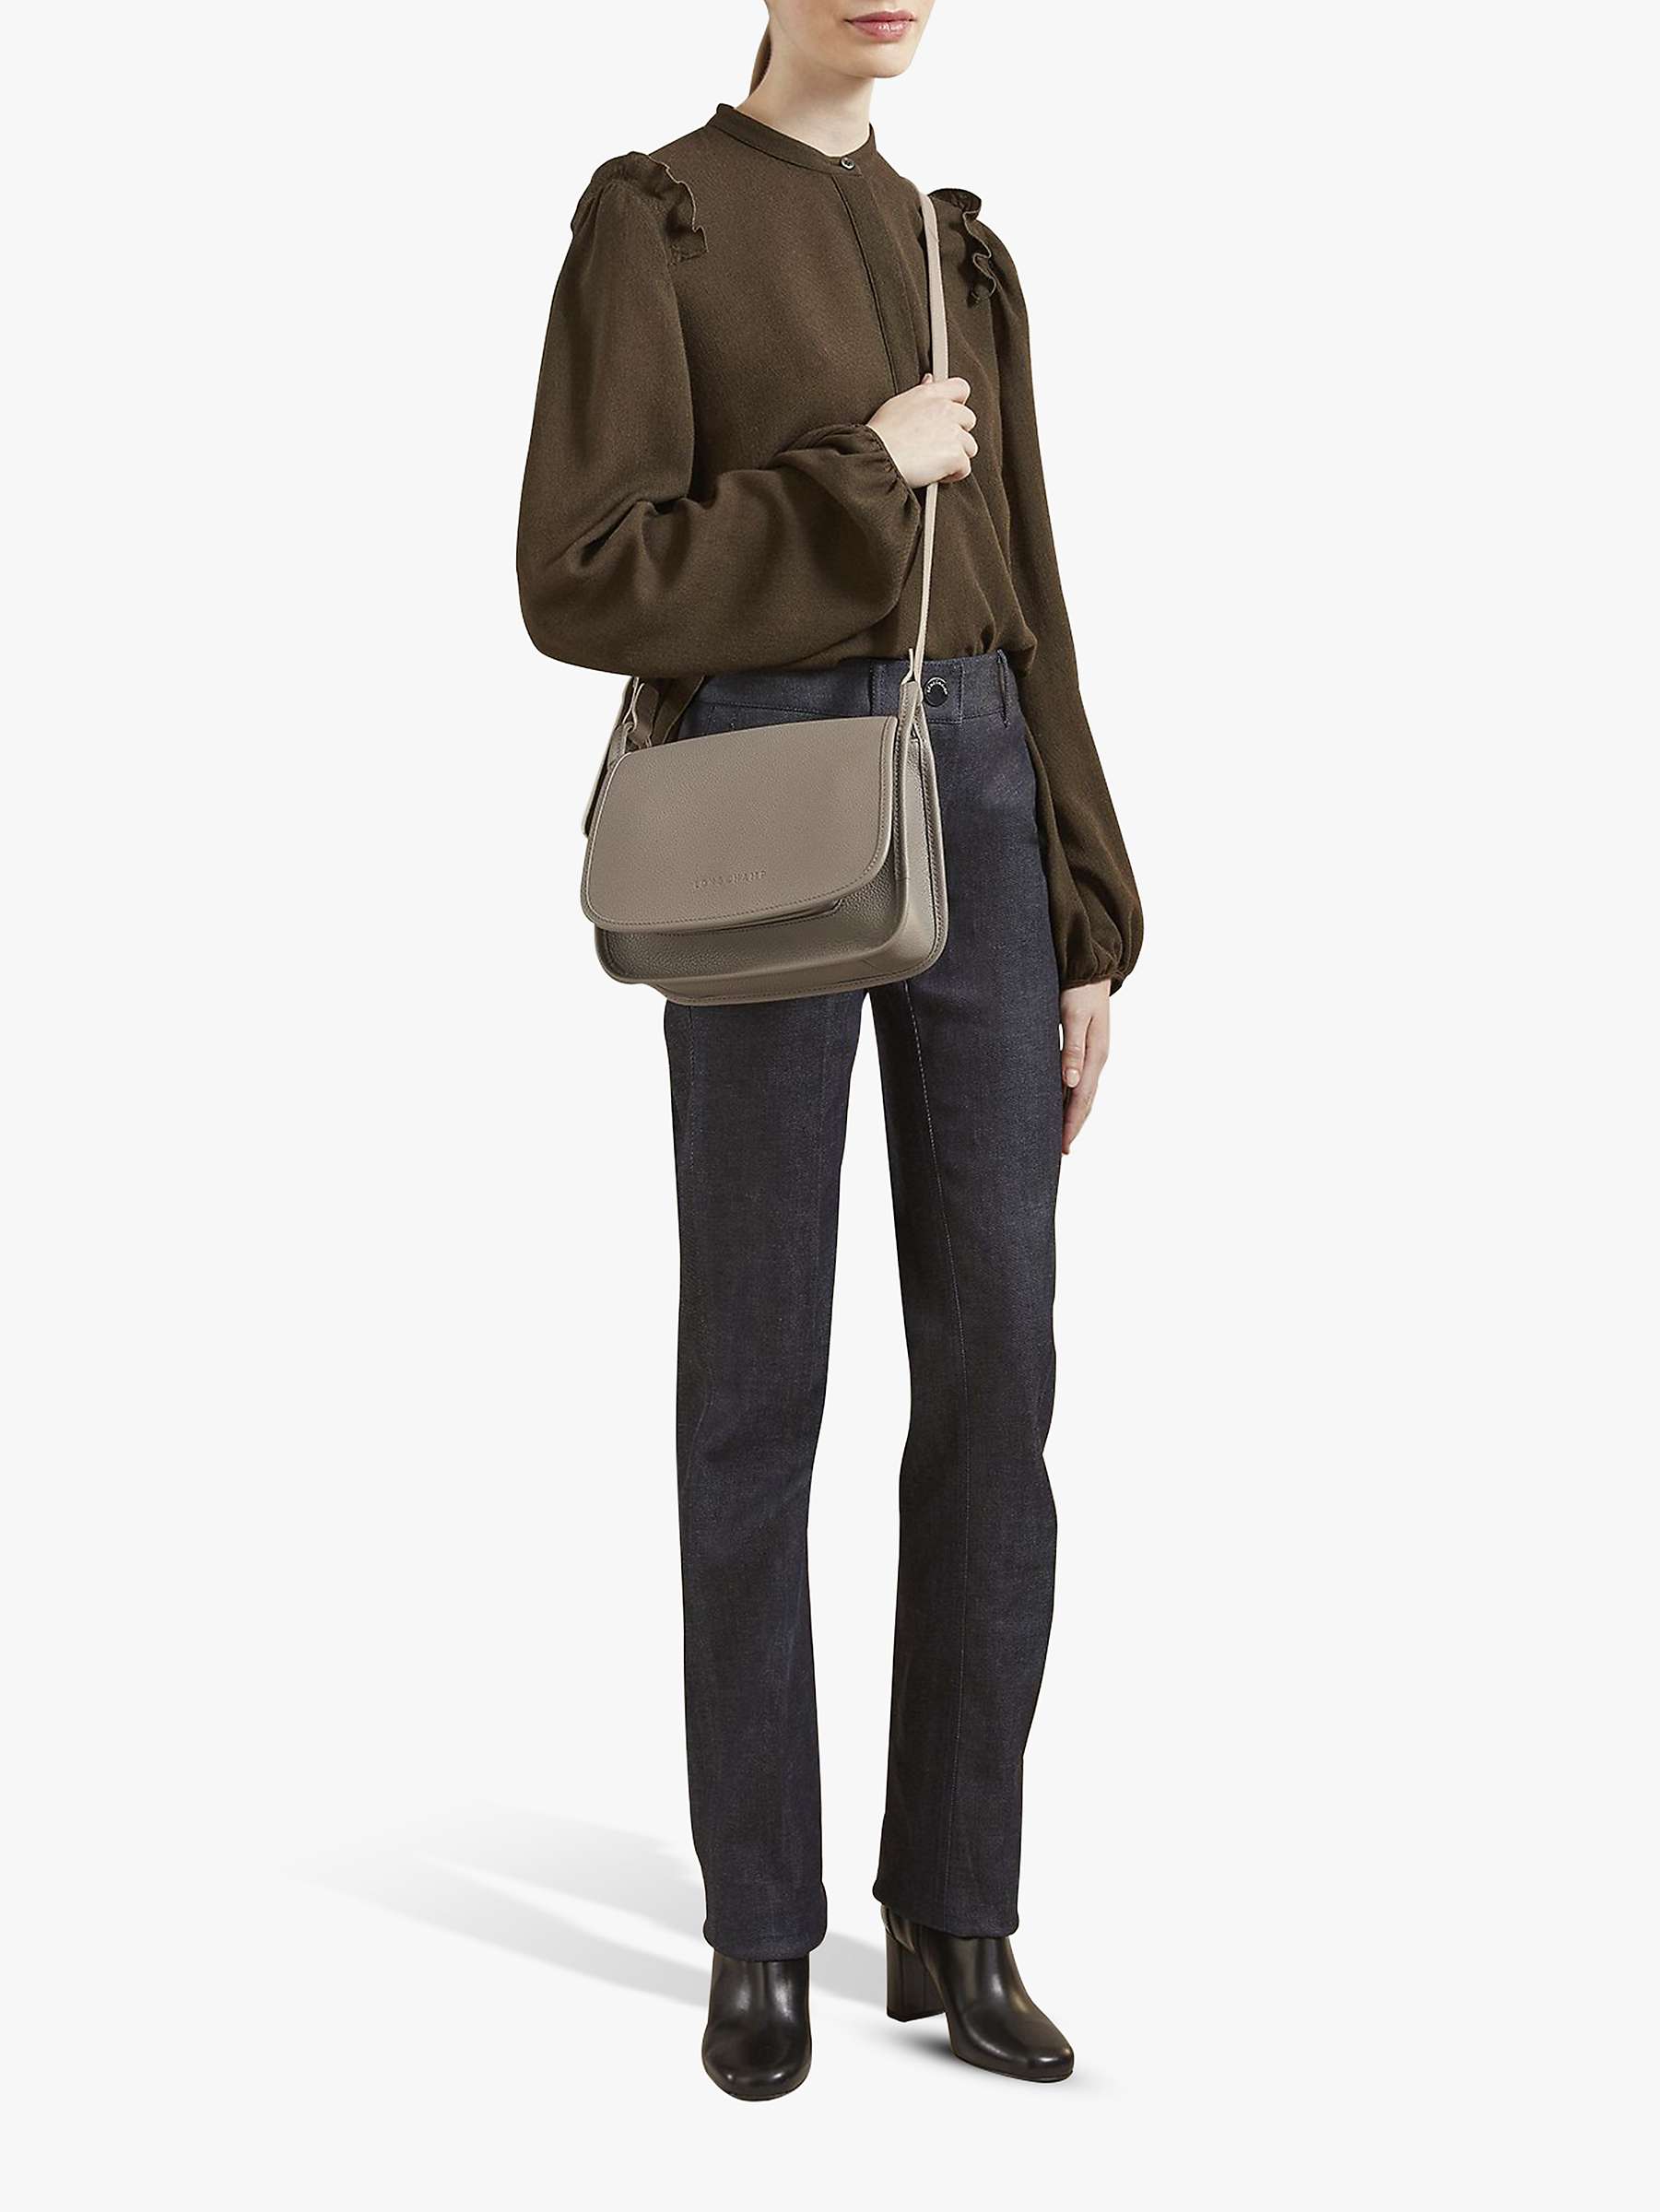 Buy Longchamp Le Foulonné Medium Leather Flap Over Cross Body Bag Online at johnlewis.com